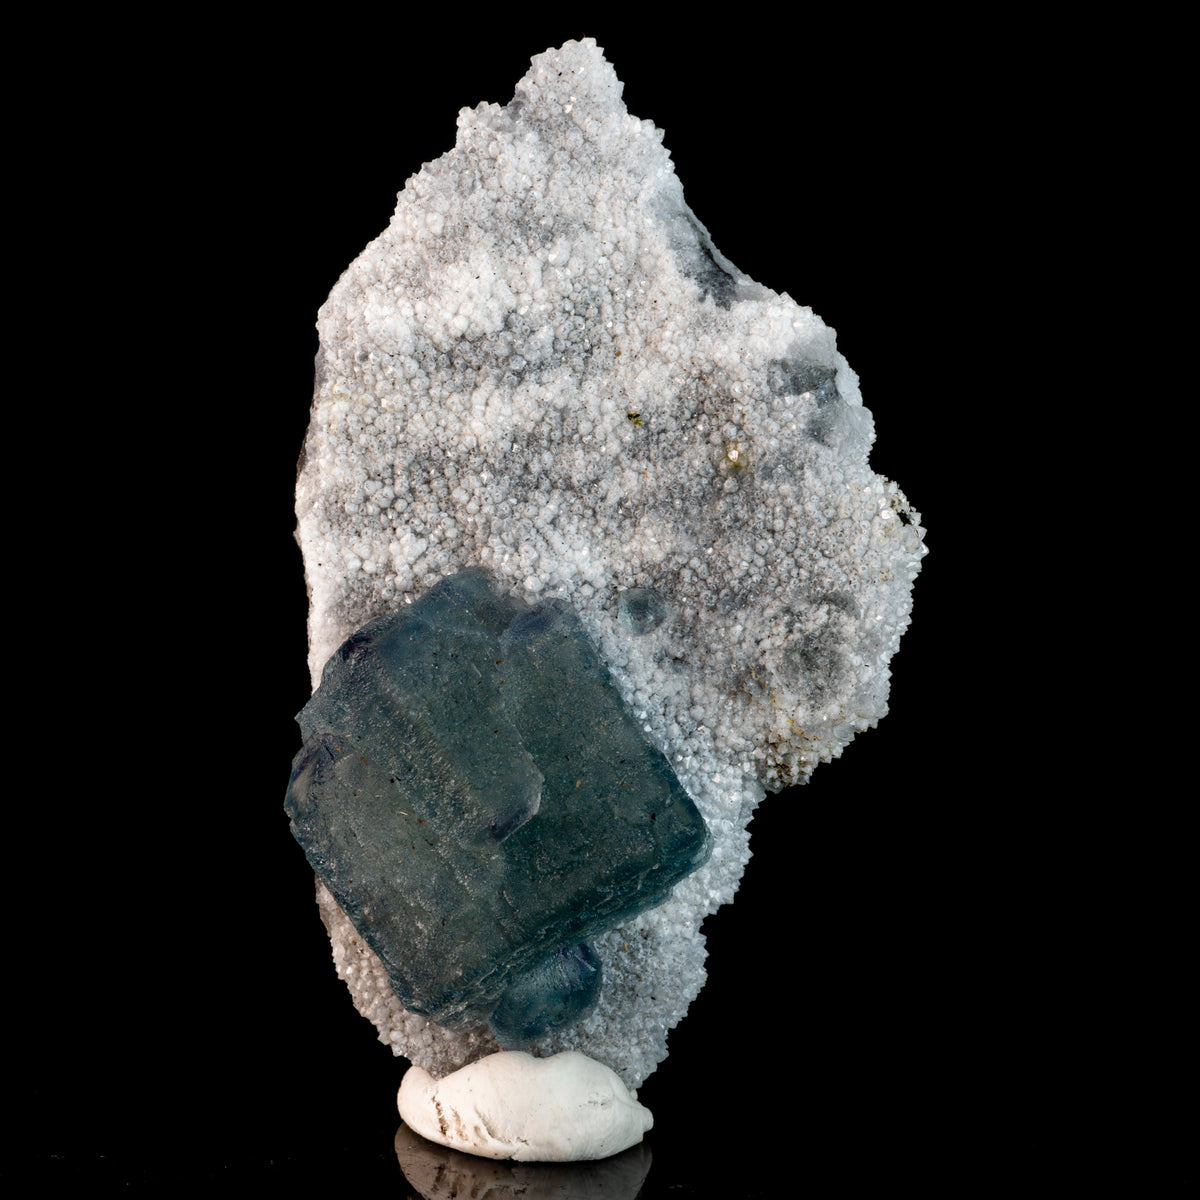 Aqua Blue Fluorite on Druzy Matrix 75g